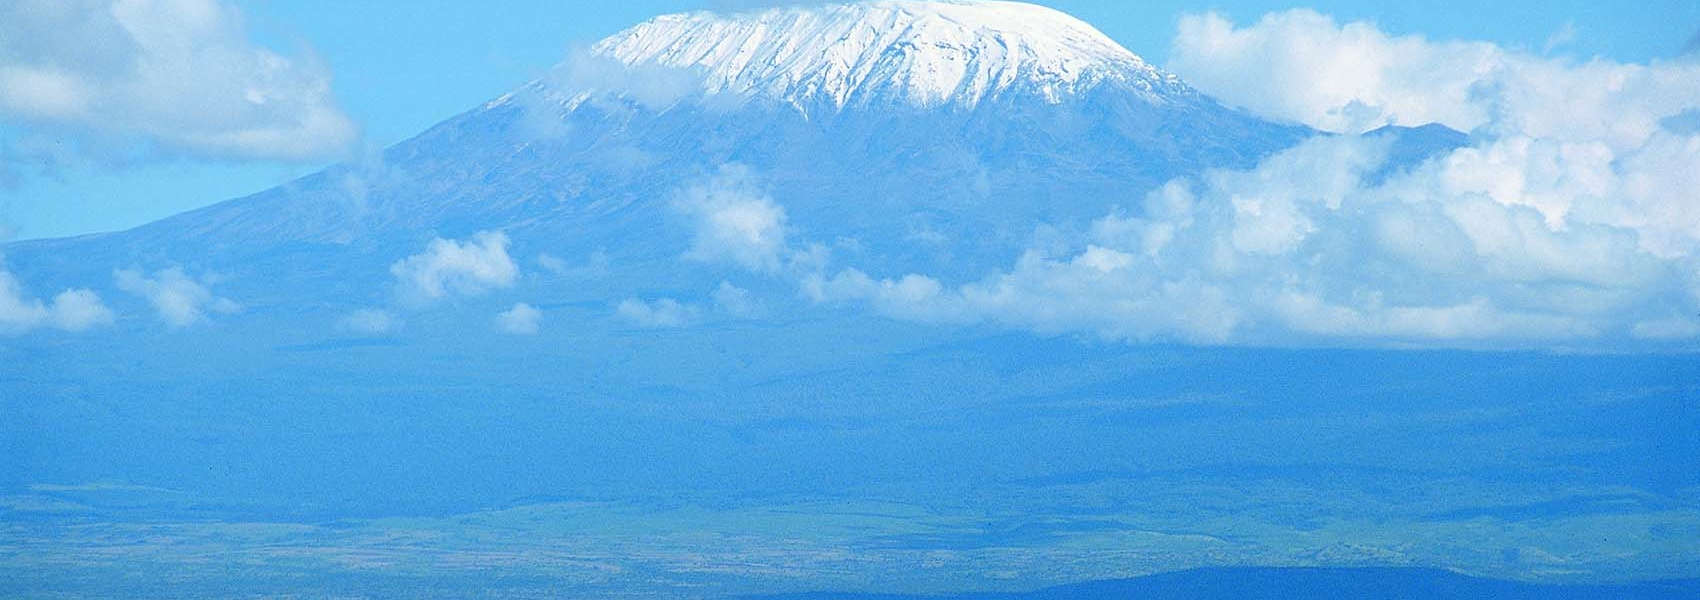 mt kilimanjaro climbs